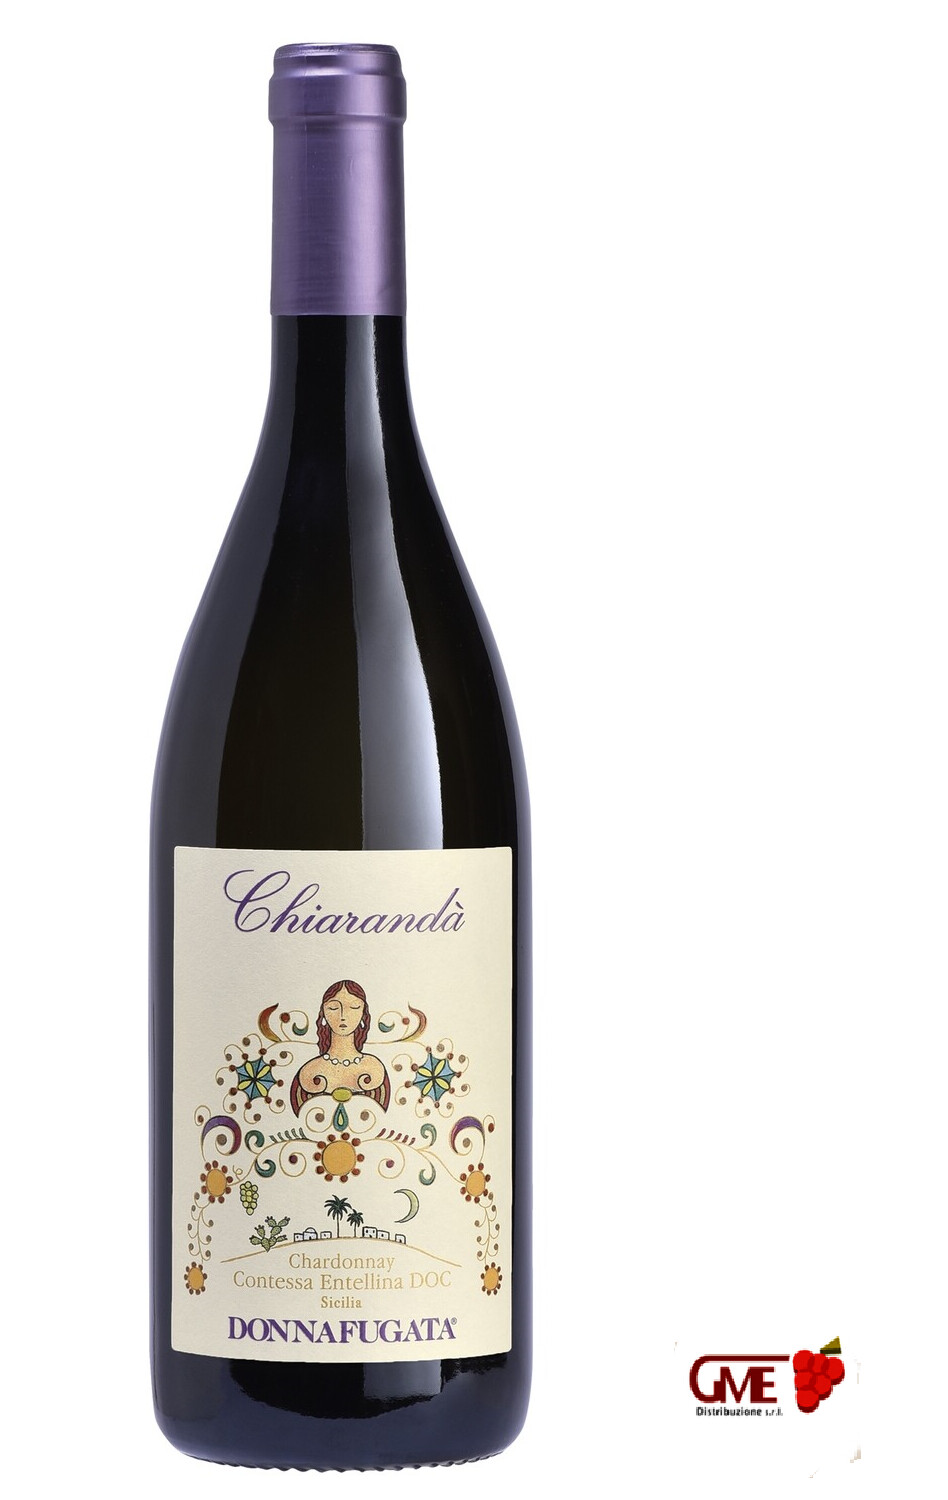 Chardonnay Chiarandà Contessa Entellina 2019 Donnafugata Cl.75 14°